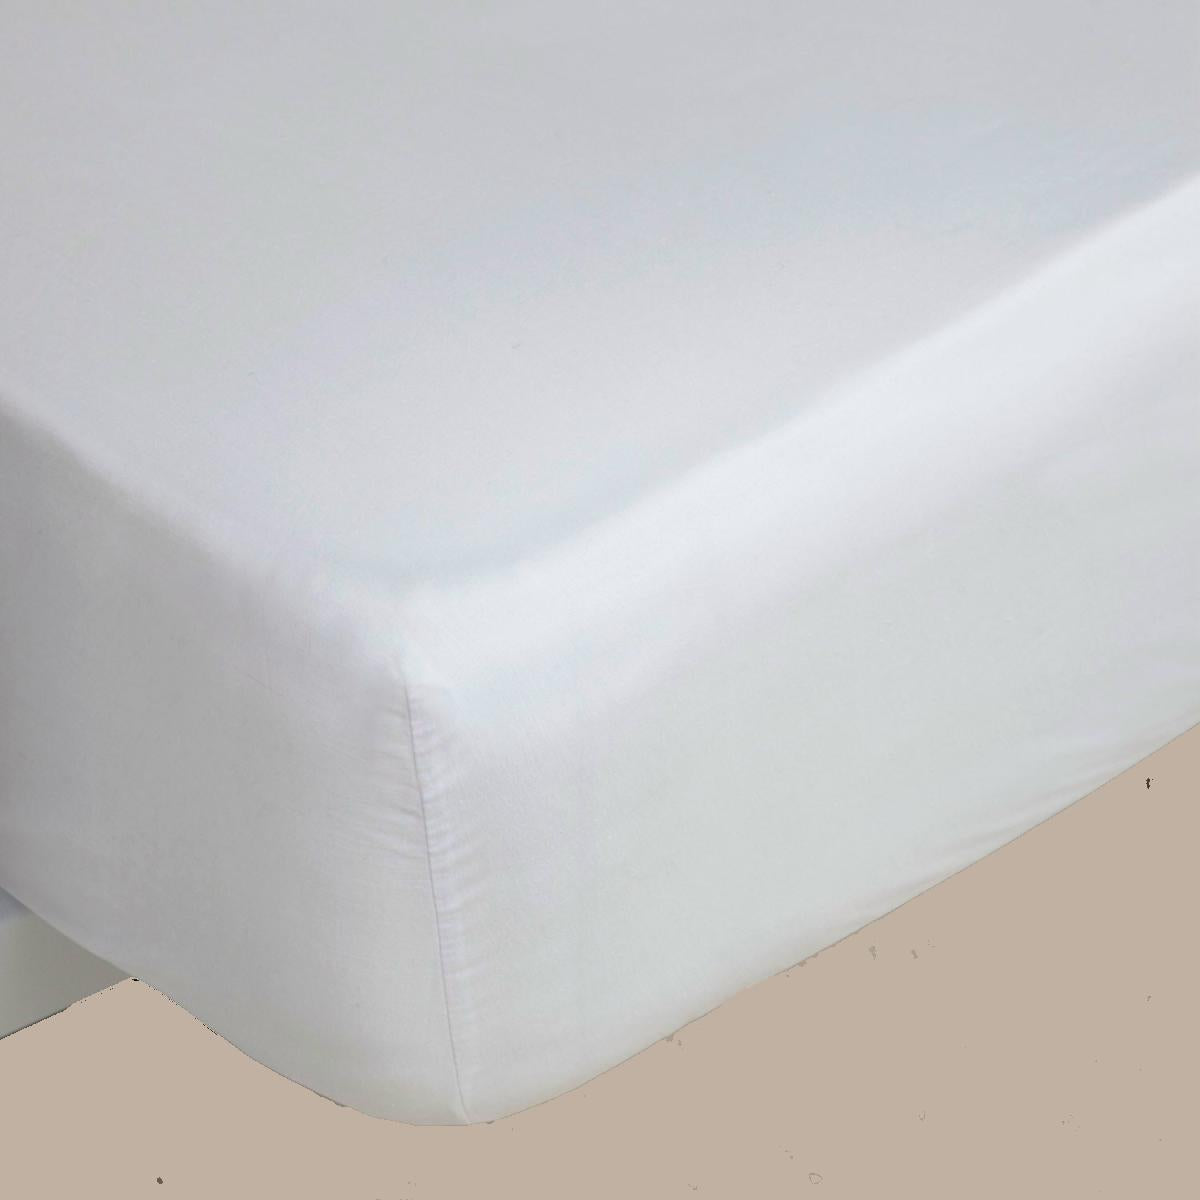 hoeslaken perkaal wit, Lysdrap - drap-housse percale de coton blanc, Lysdrap - fitted sheet cotton percale white, Lysdrap